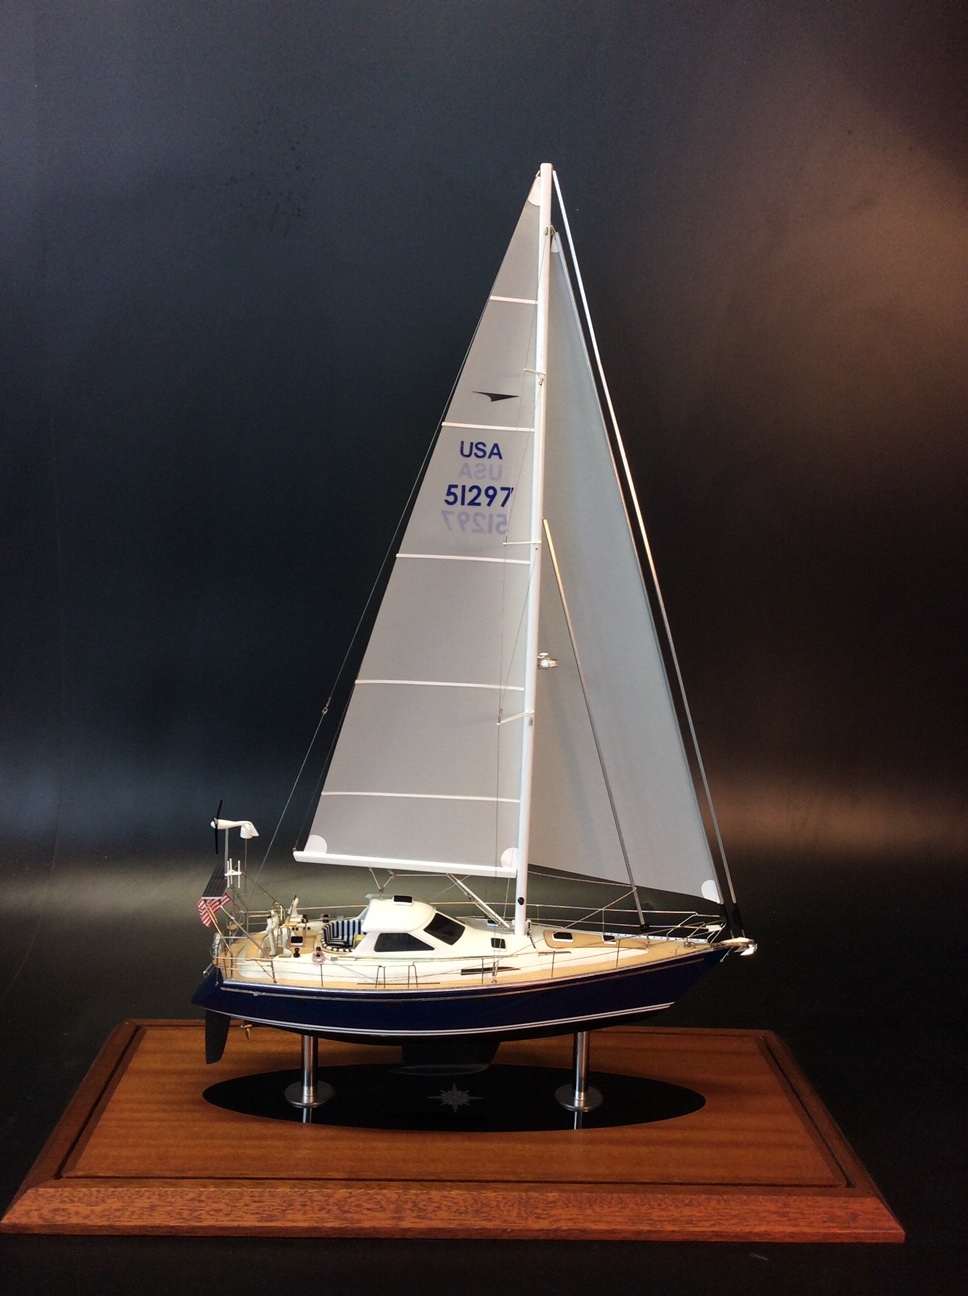 Model of the Ron Holland Design Trintella 47 a mono hull sailing yacht